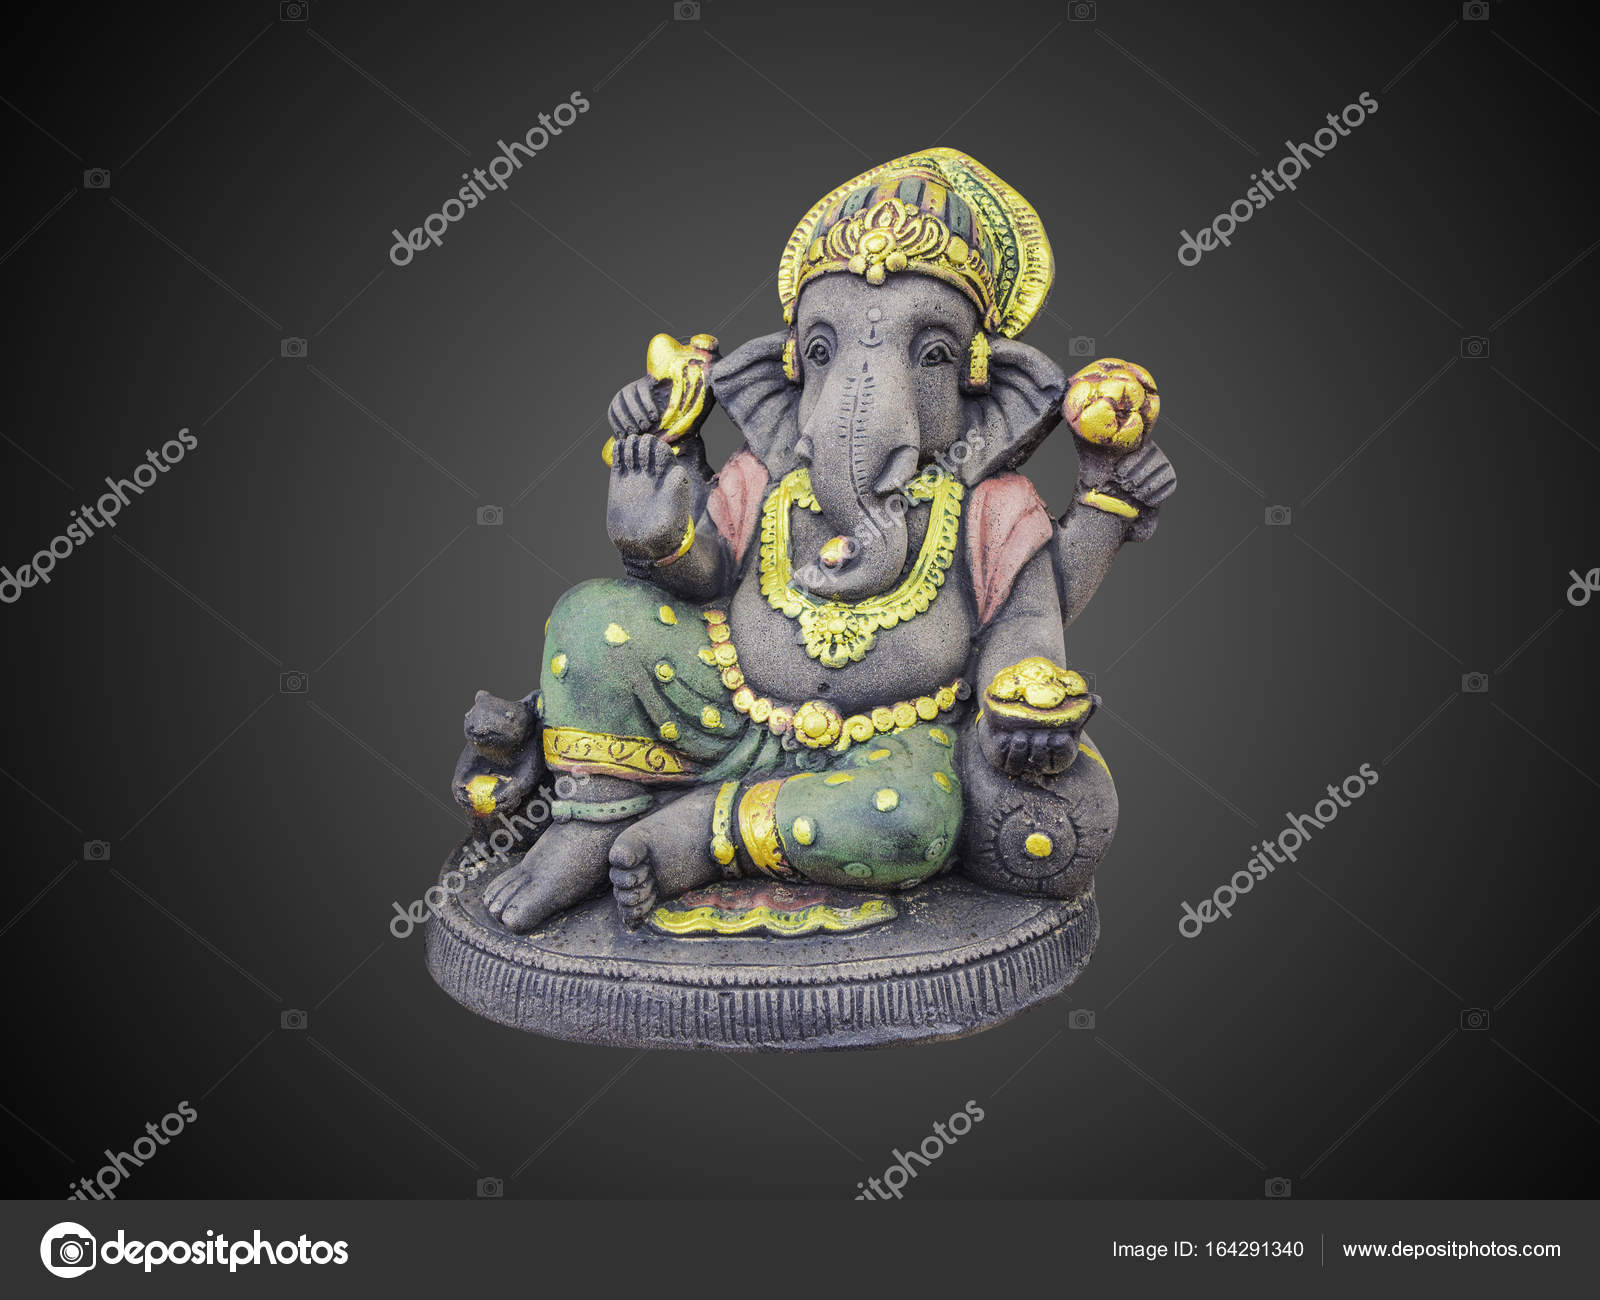 Hindu Gott Ganesha Herr Des Erfolgs Isolieren Stockfotografie Lizenzfreie Fotos C Spukkato Depositphotos